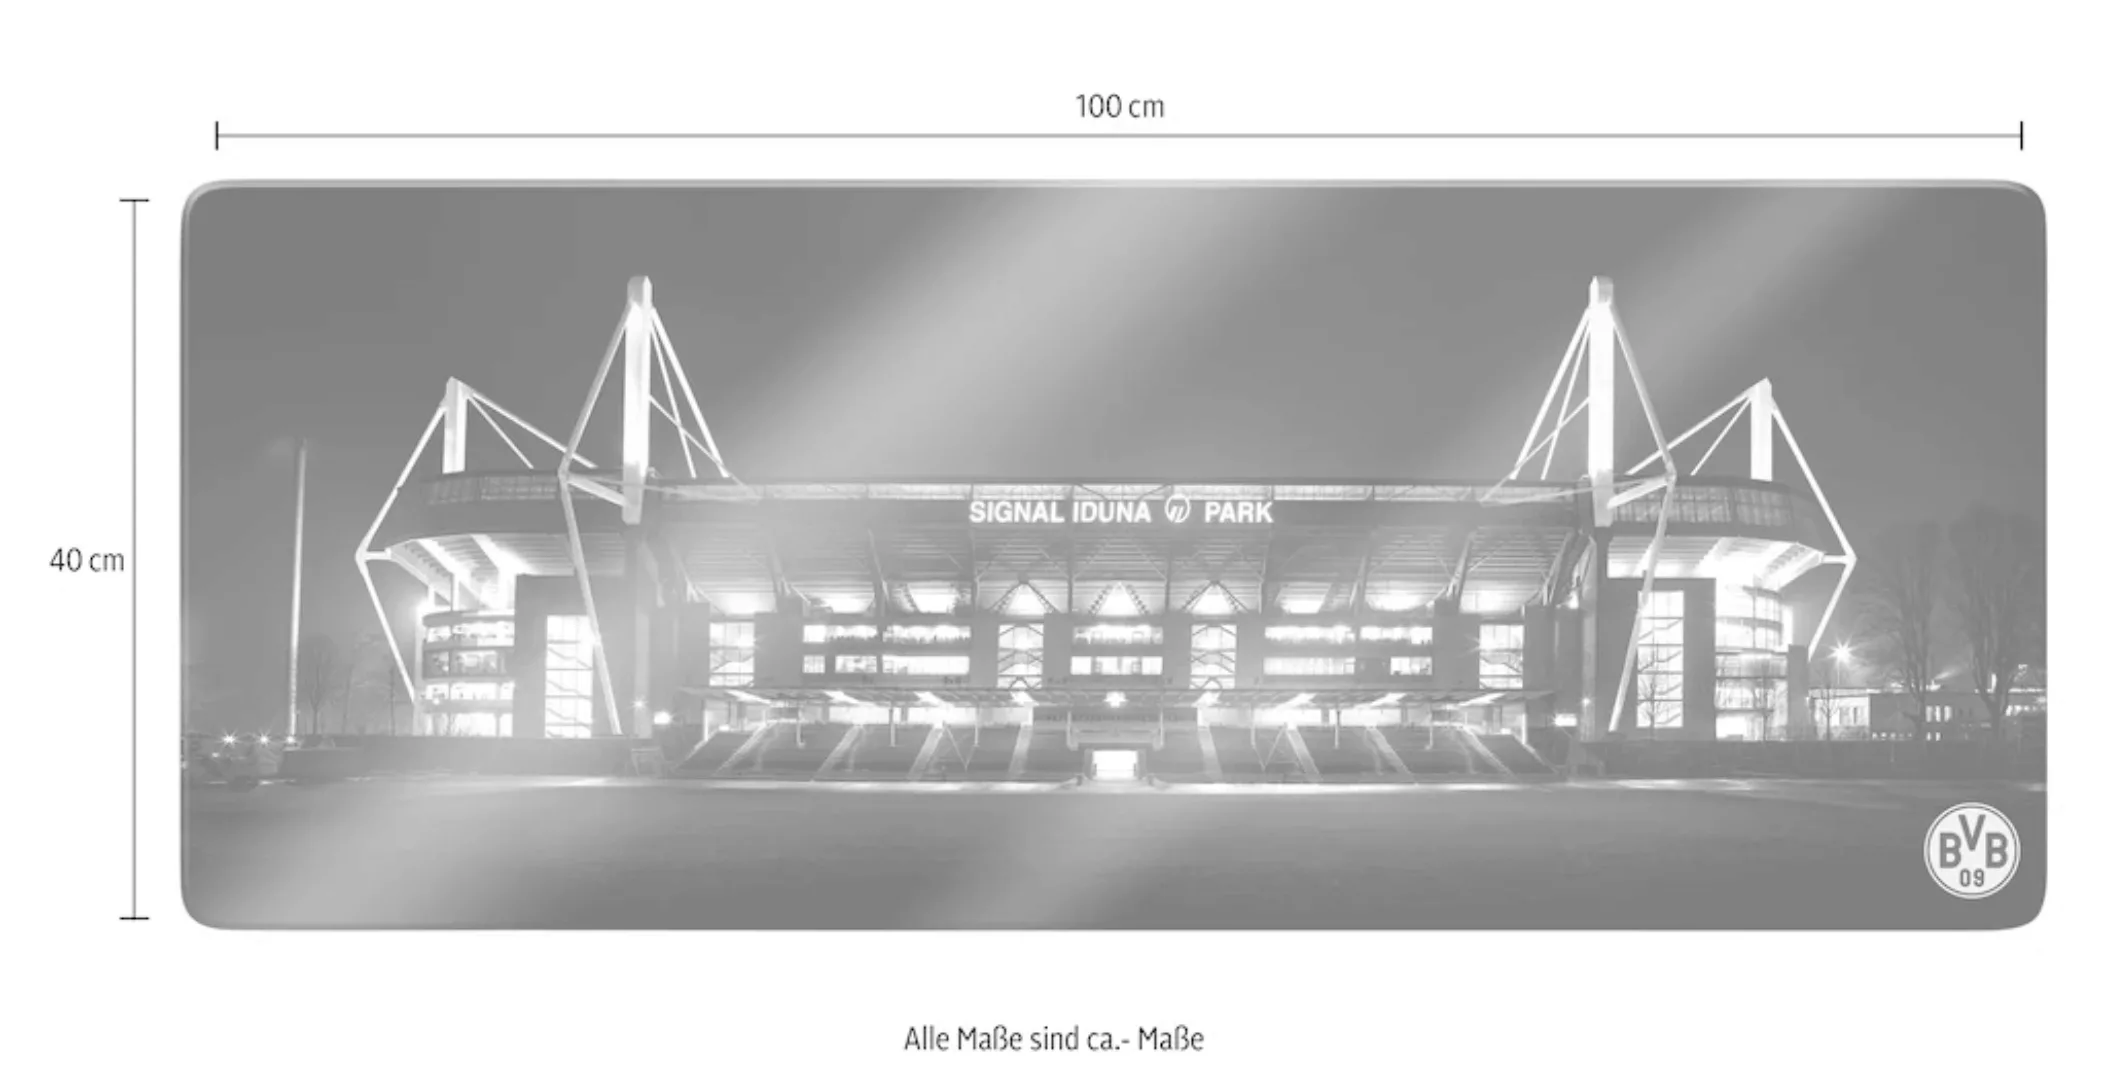 Wall-Art Glasbild "BVB Signal Iduna Park" günstig online kaufen